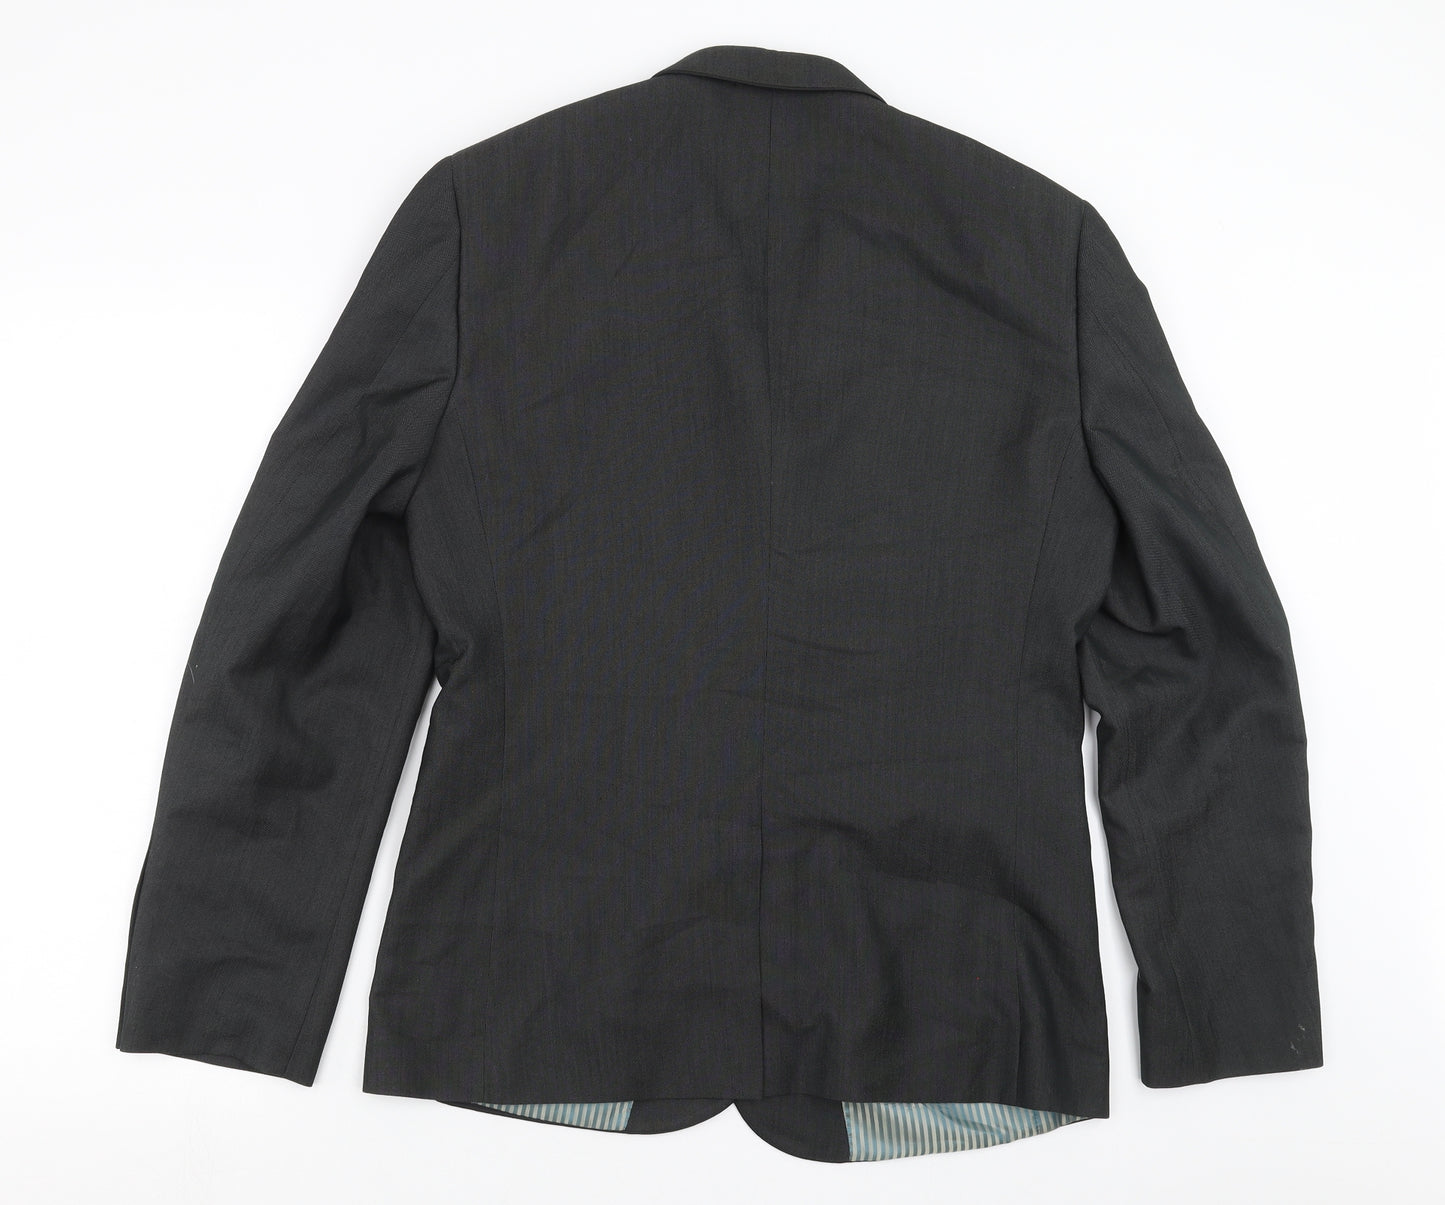 Goodsouls Mens Grey   Jacket Suit Jacket Size 40